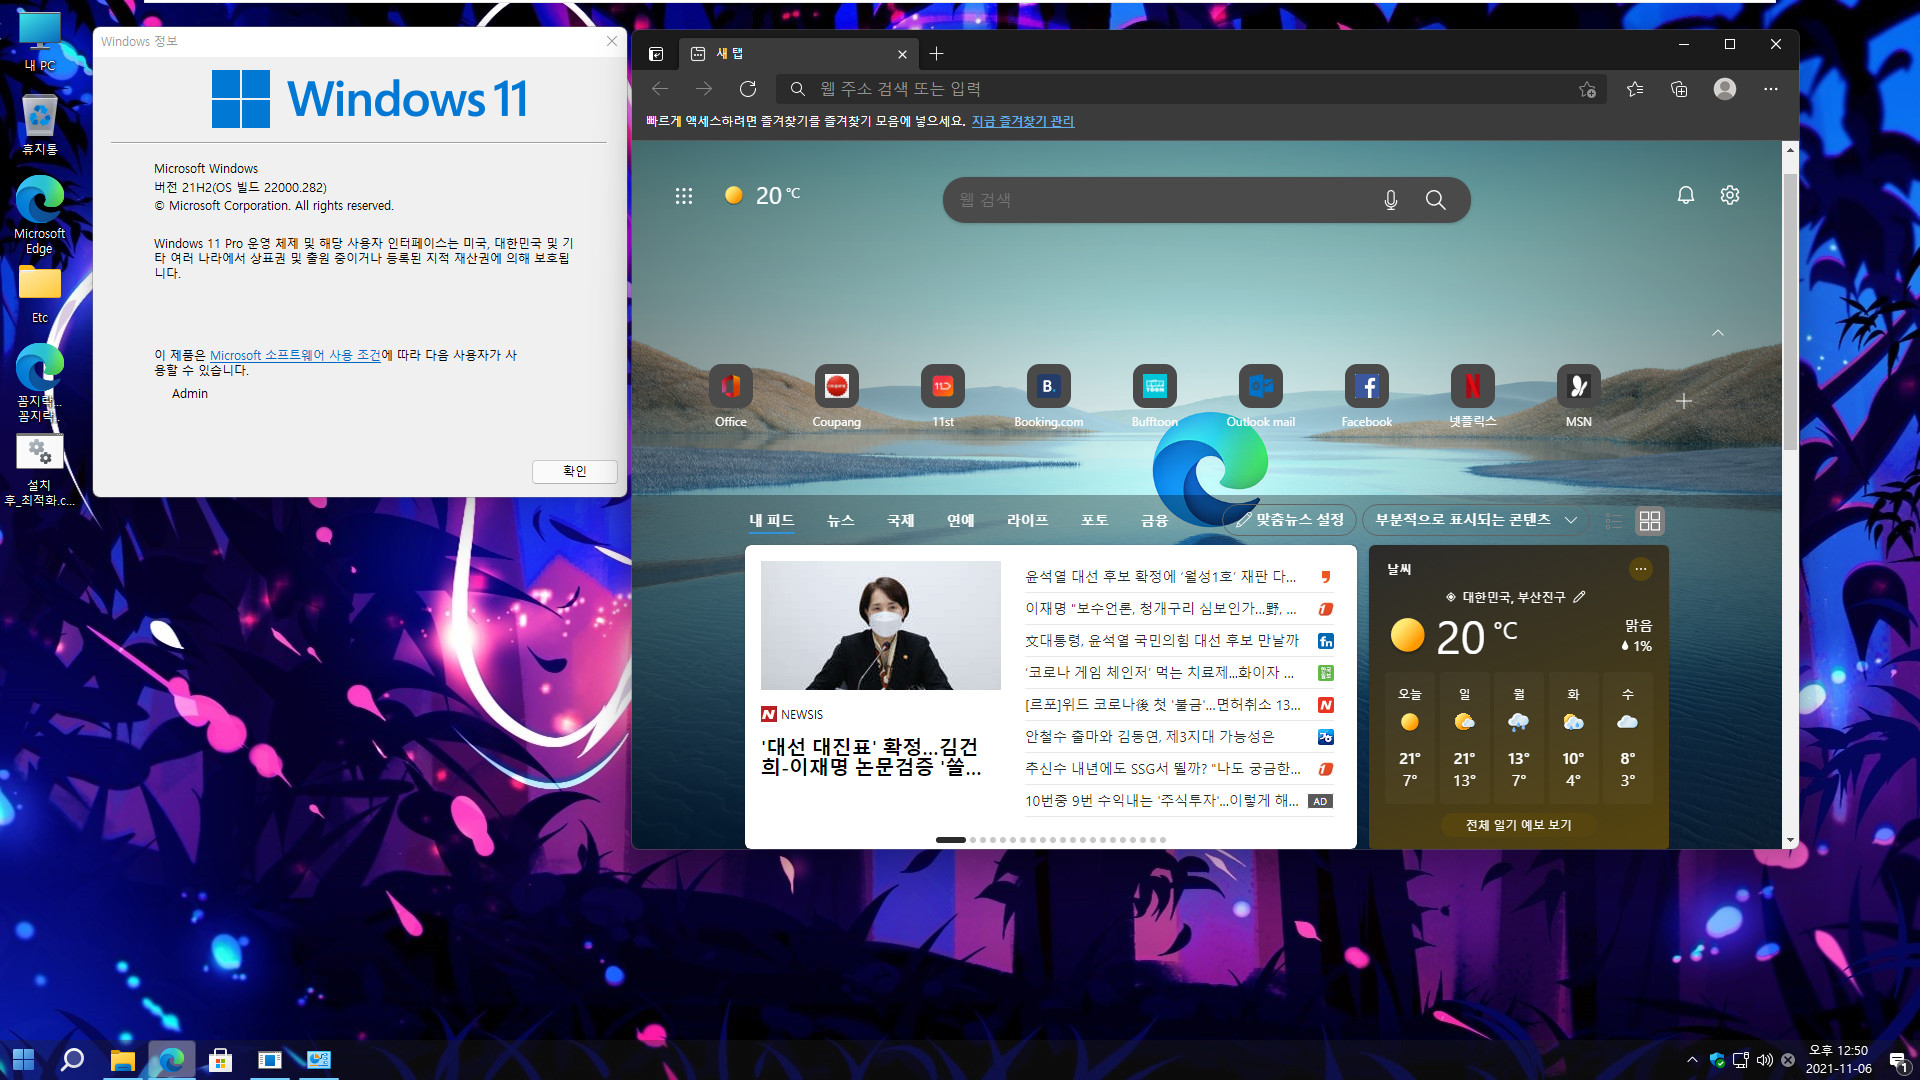 Windows 11 Pro (22000.282) FBConan_Phoenix_20211106.vhd 설치 테스트 2021-11-06_125035.jpg